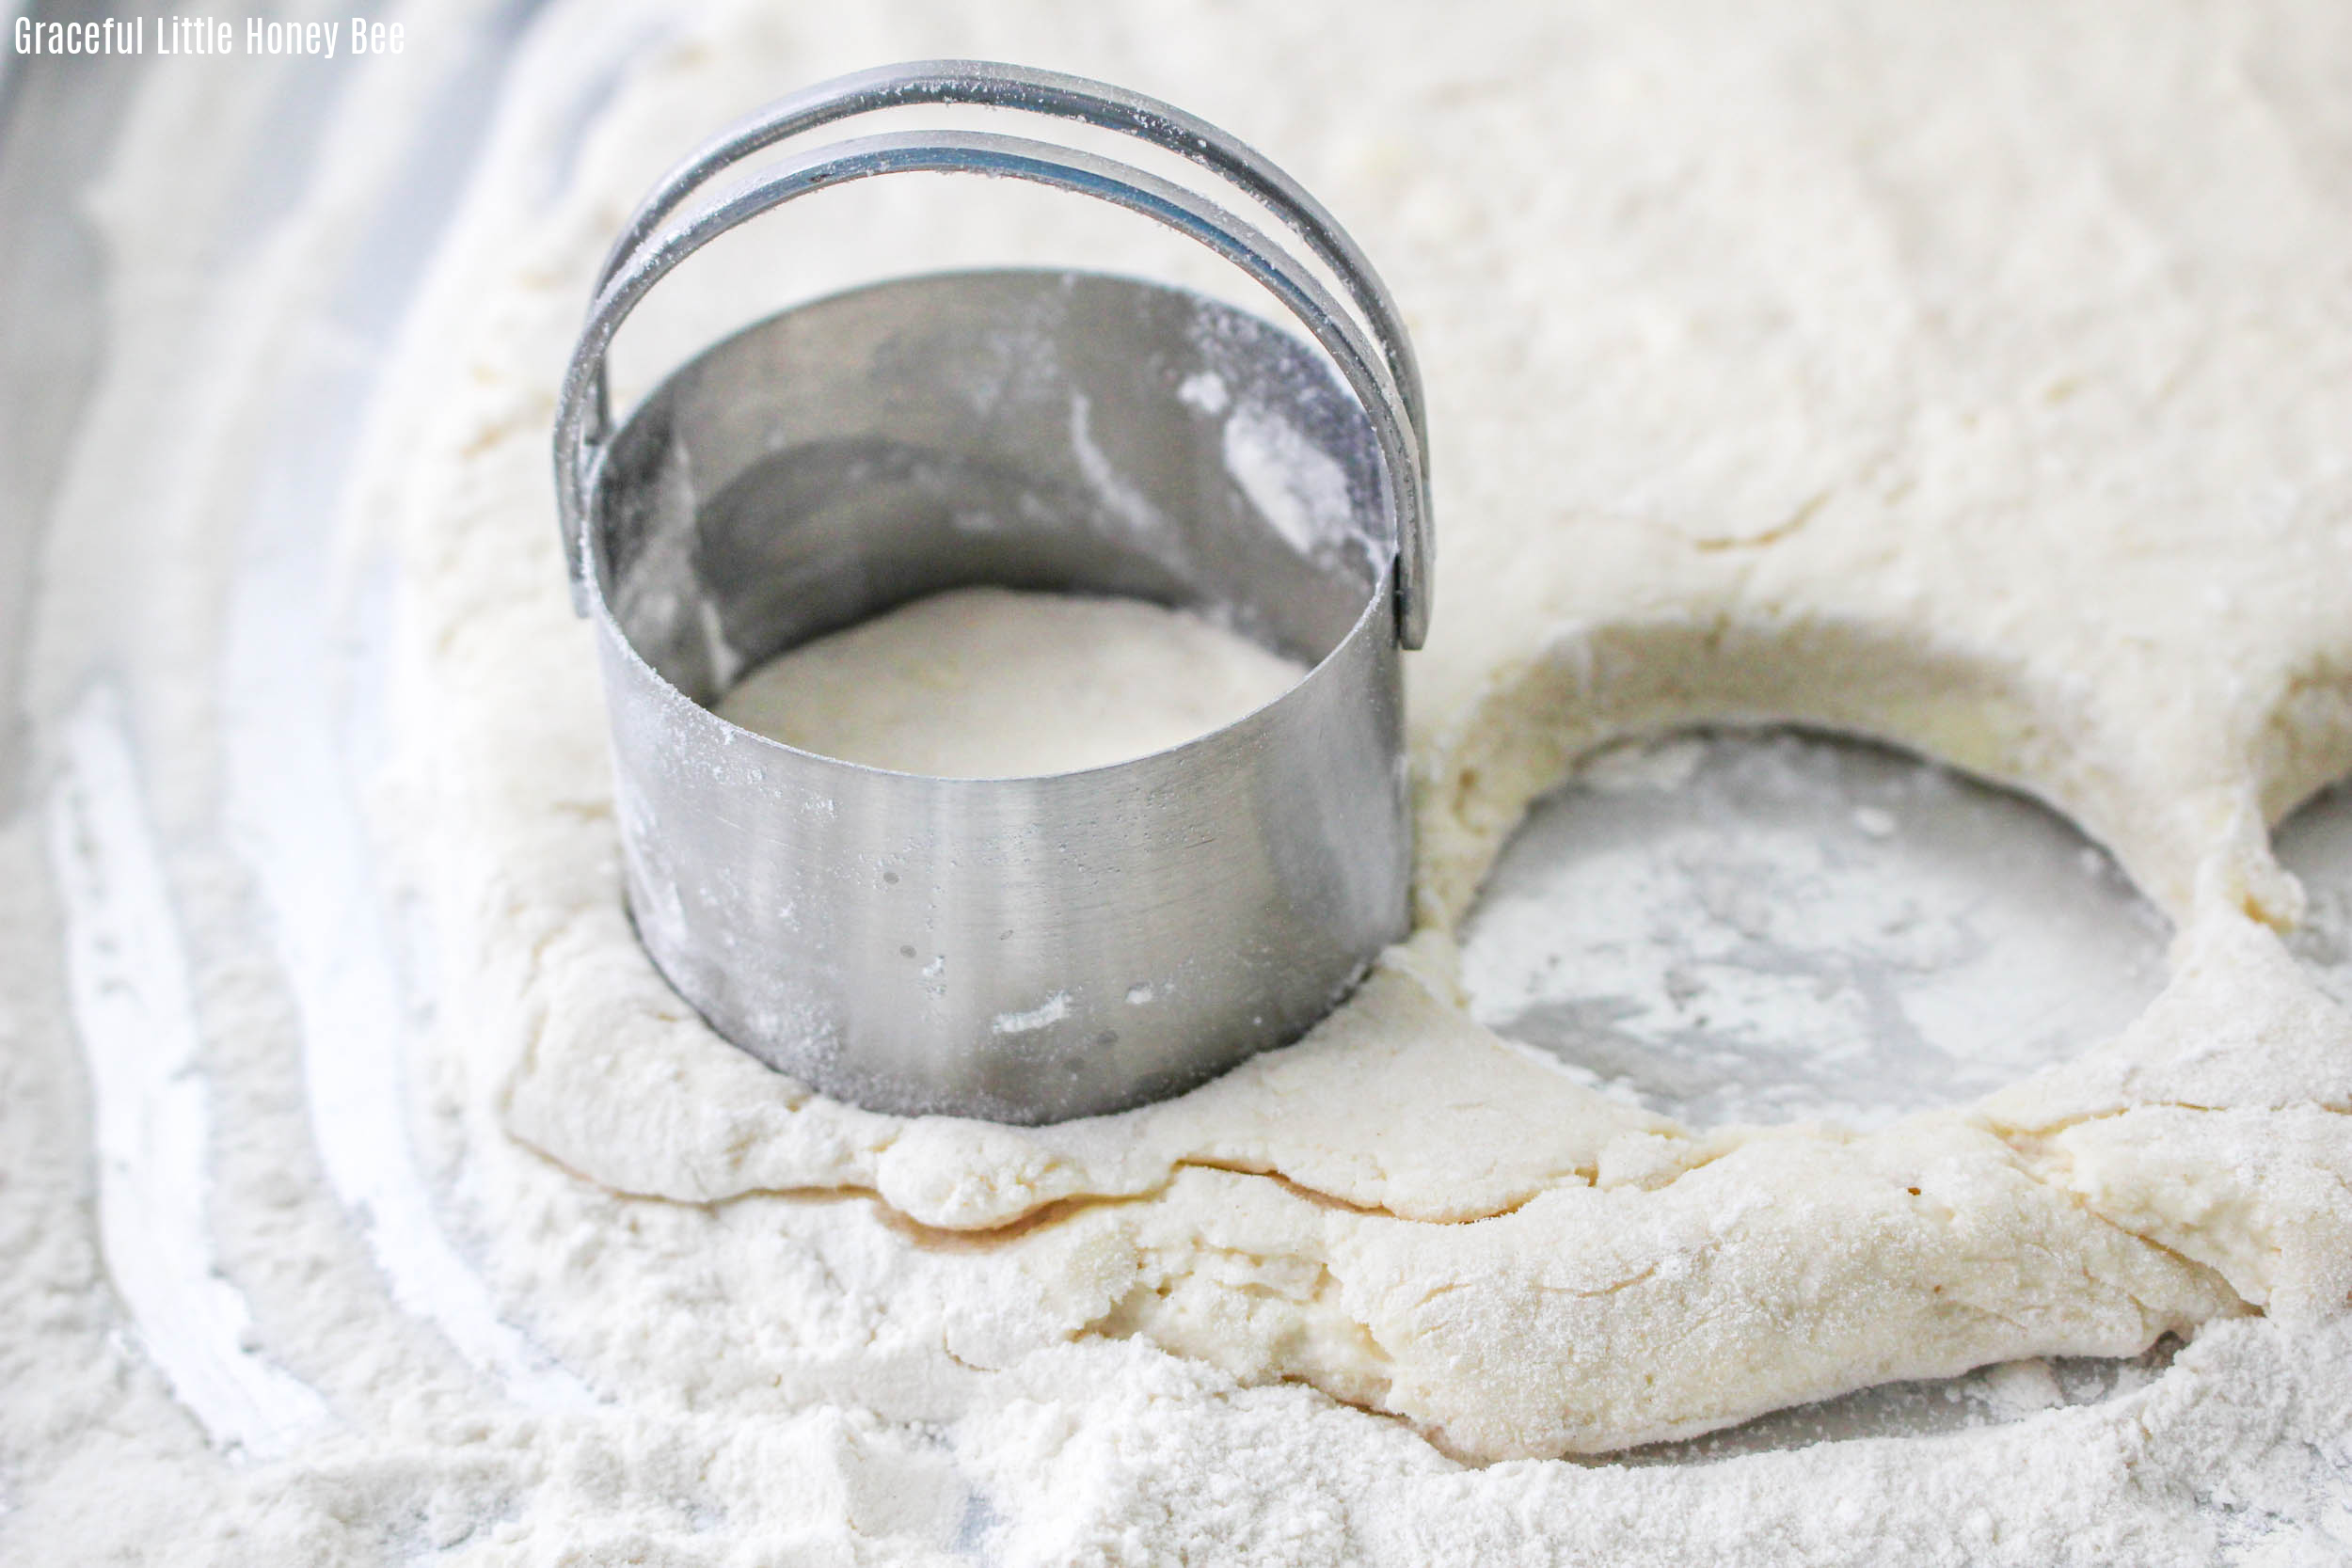 A close up view of a biscuit cutter cutting biscuit dough.